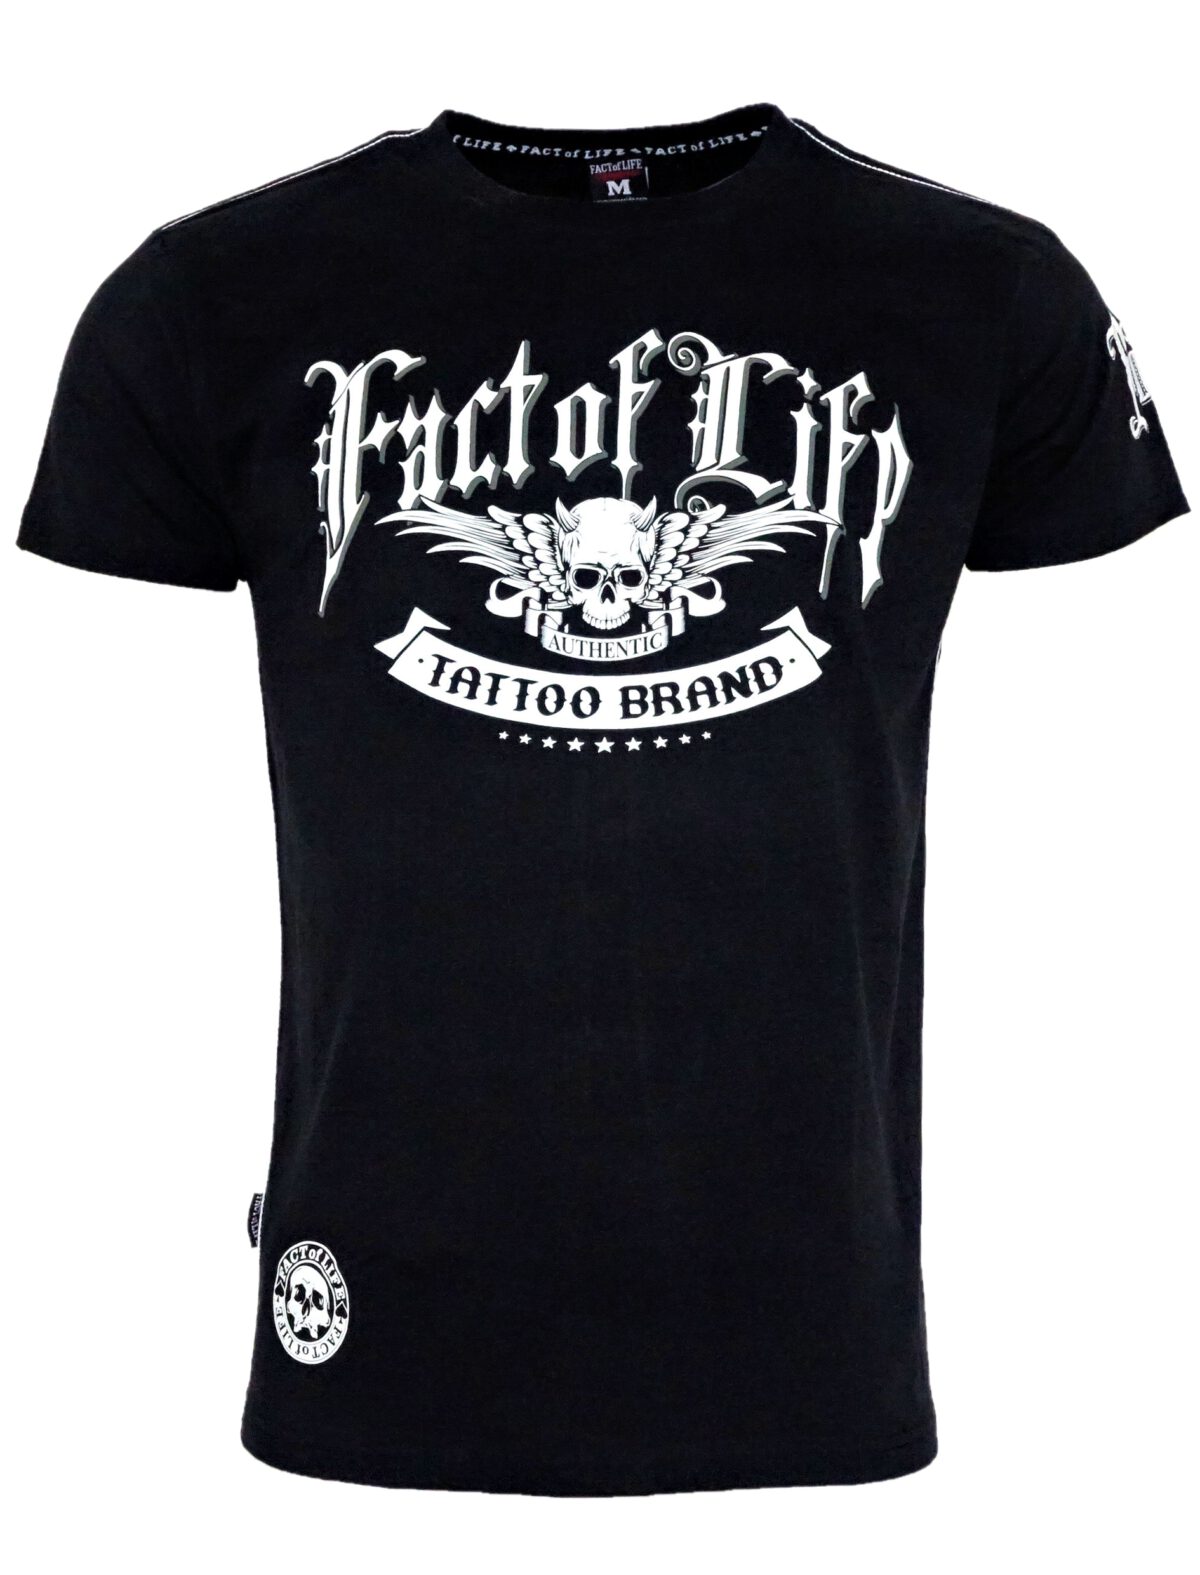 Fact of Life T-Shirt Voodoo TS-33 black